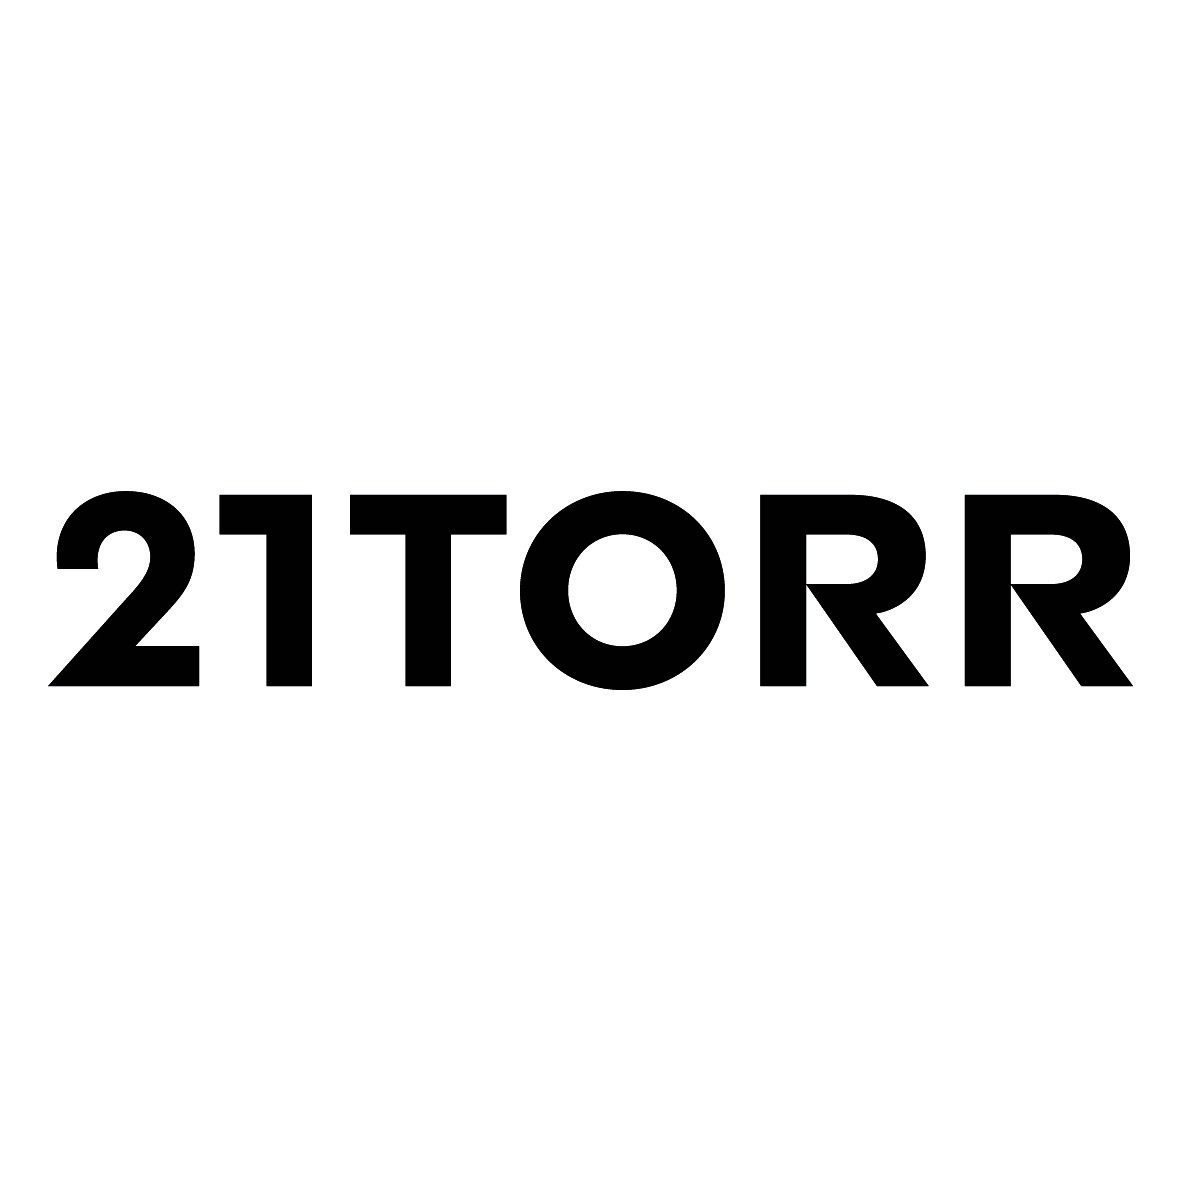 21TORR GmbH